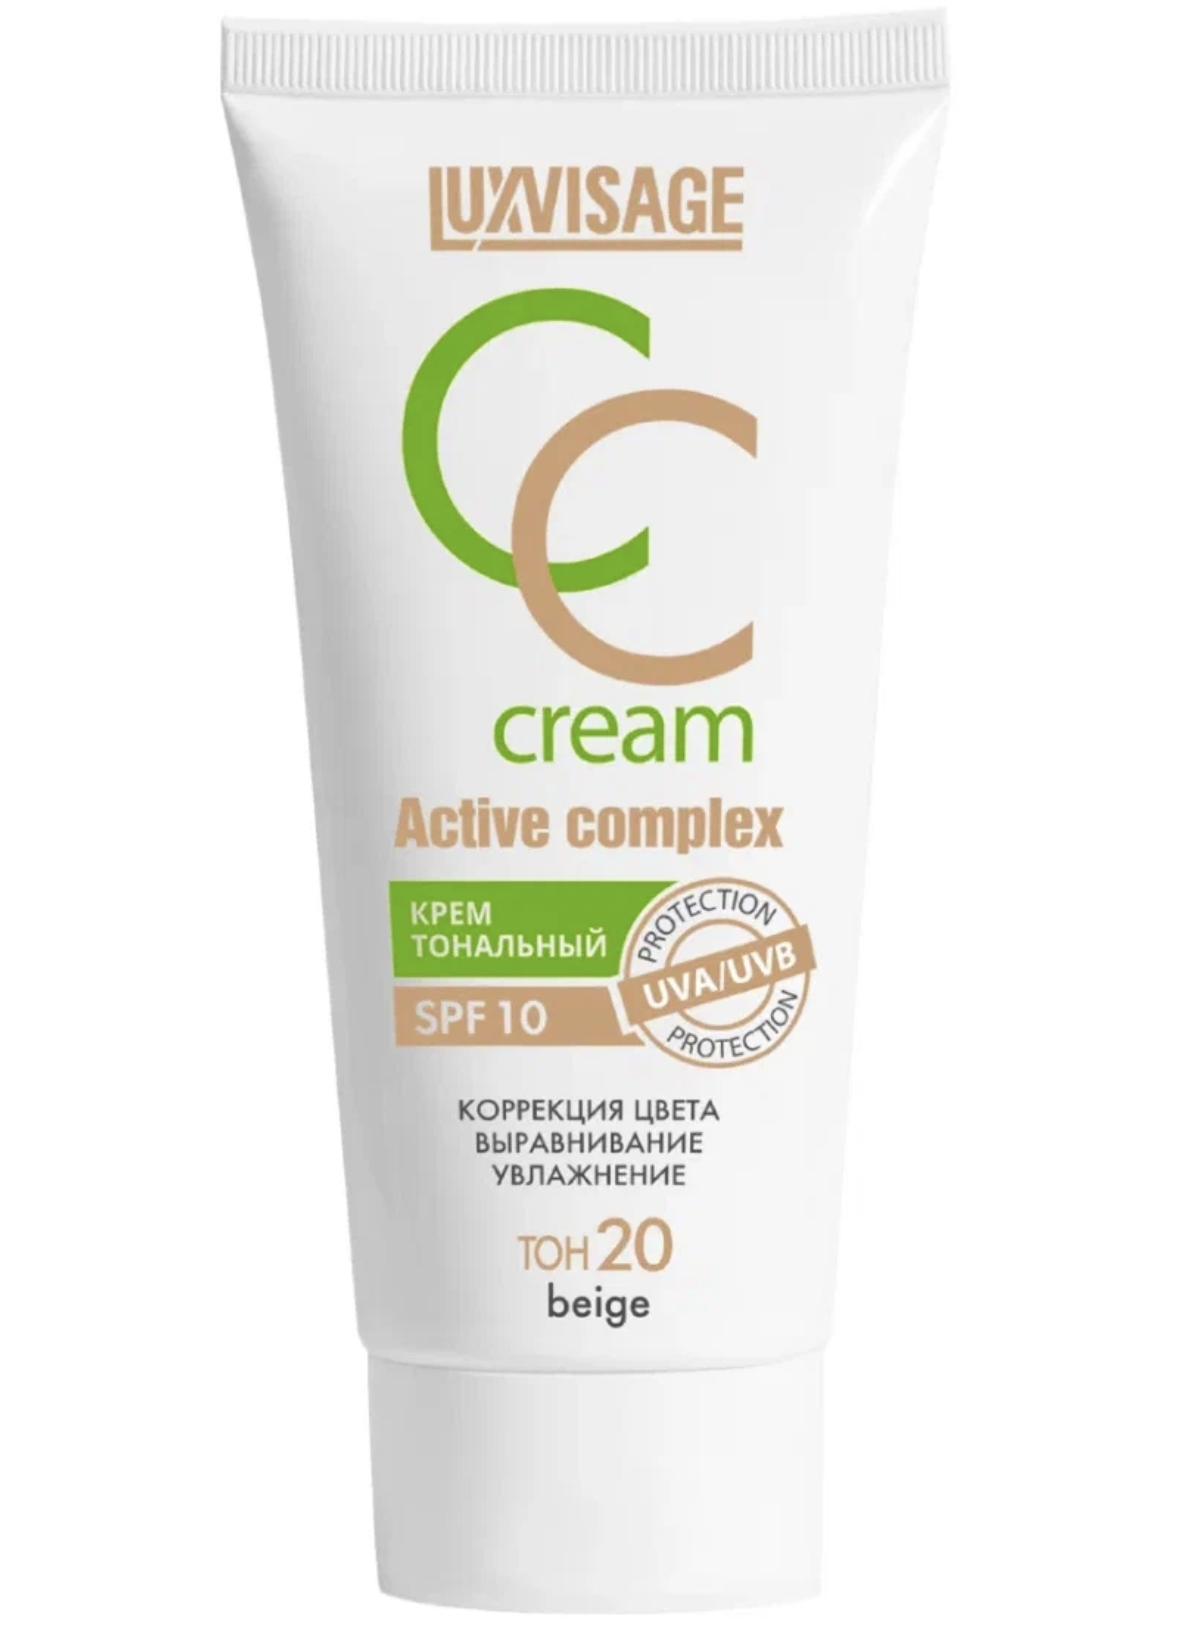   / LuxVisage -   CC Cream Active Complex  20 Beige 35 